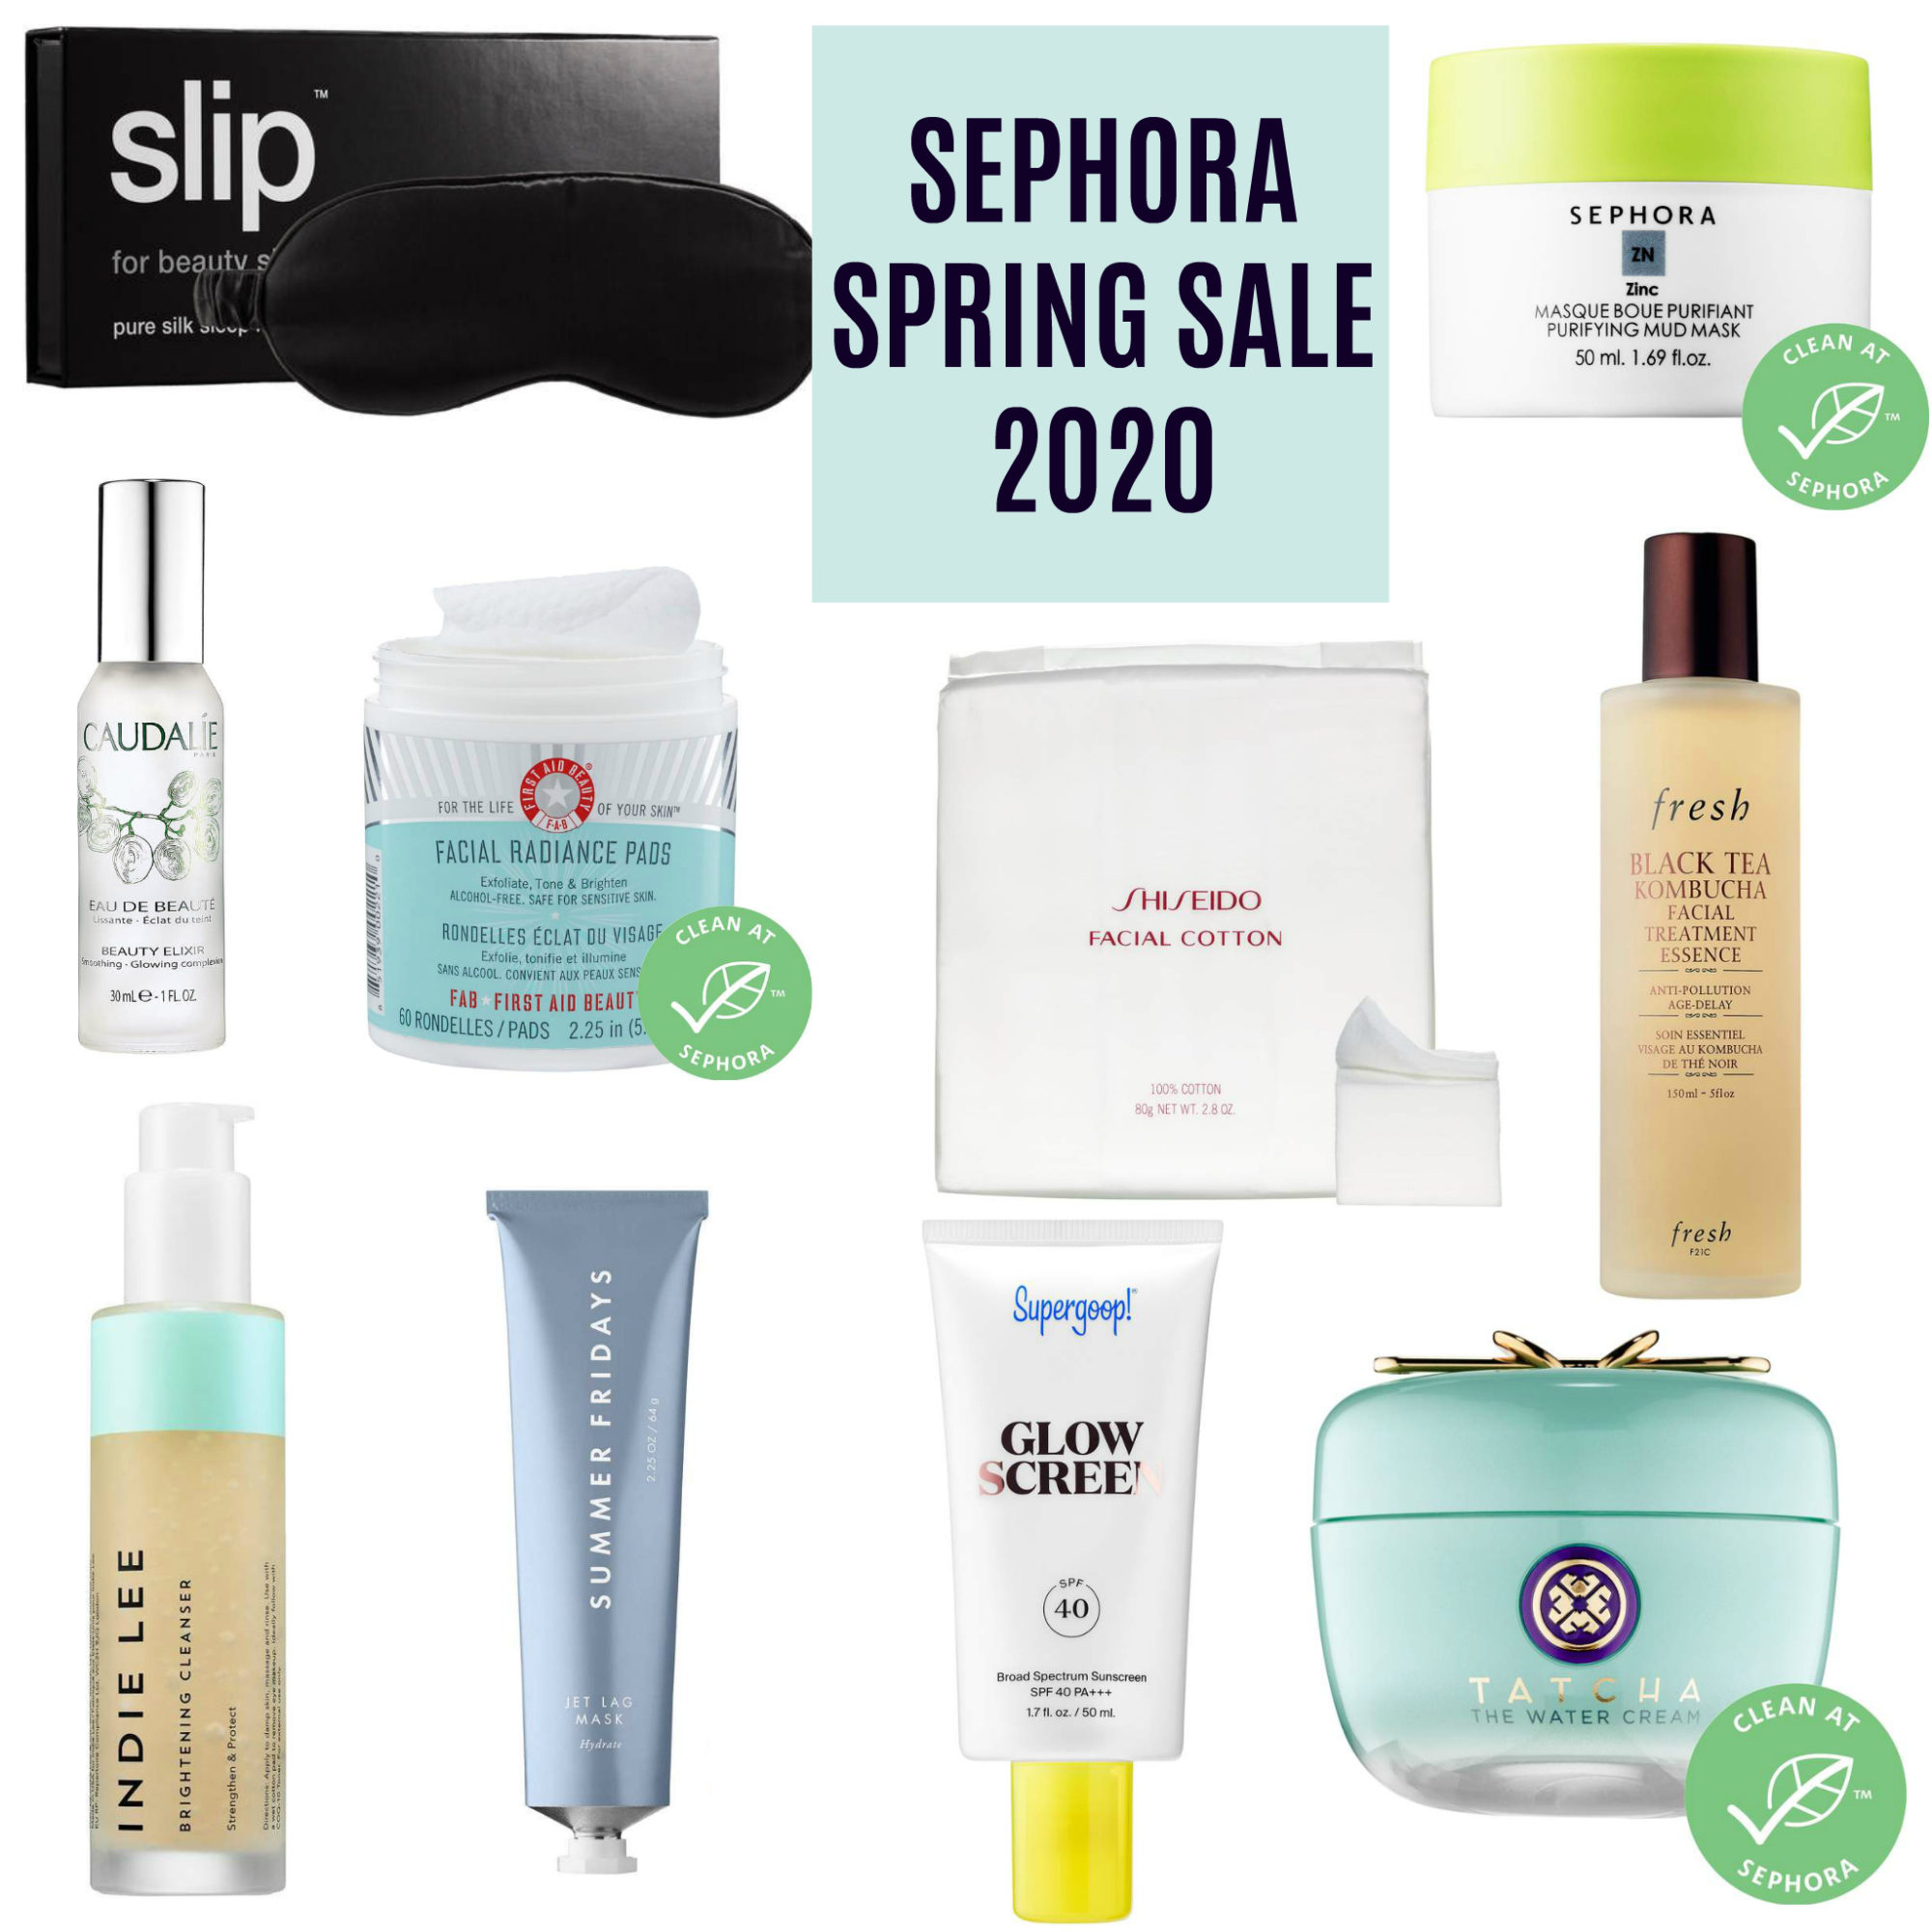 Sephora Spring Sale 2020